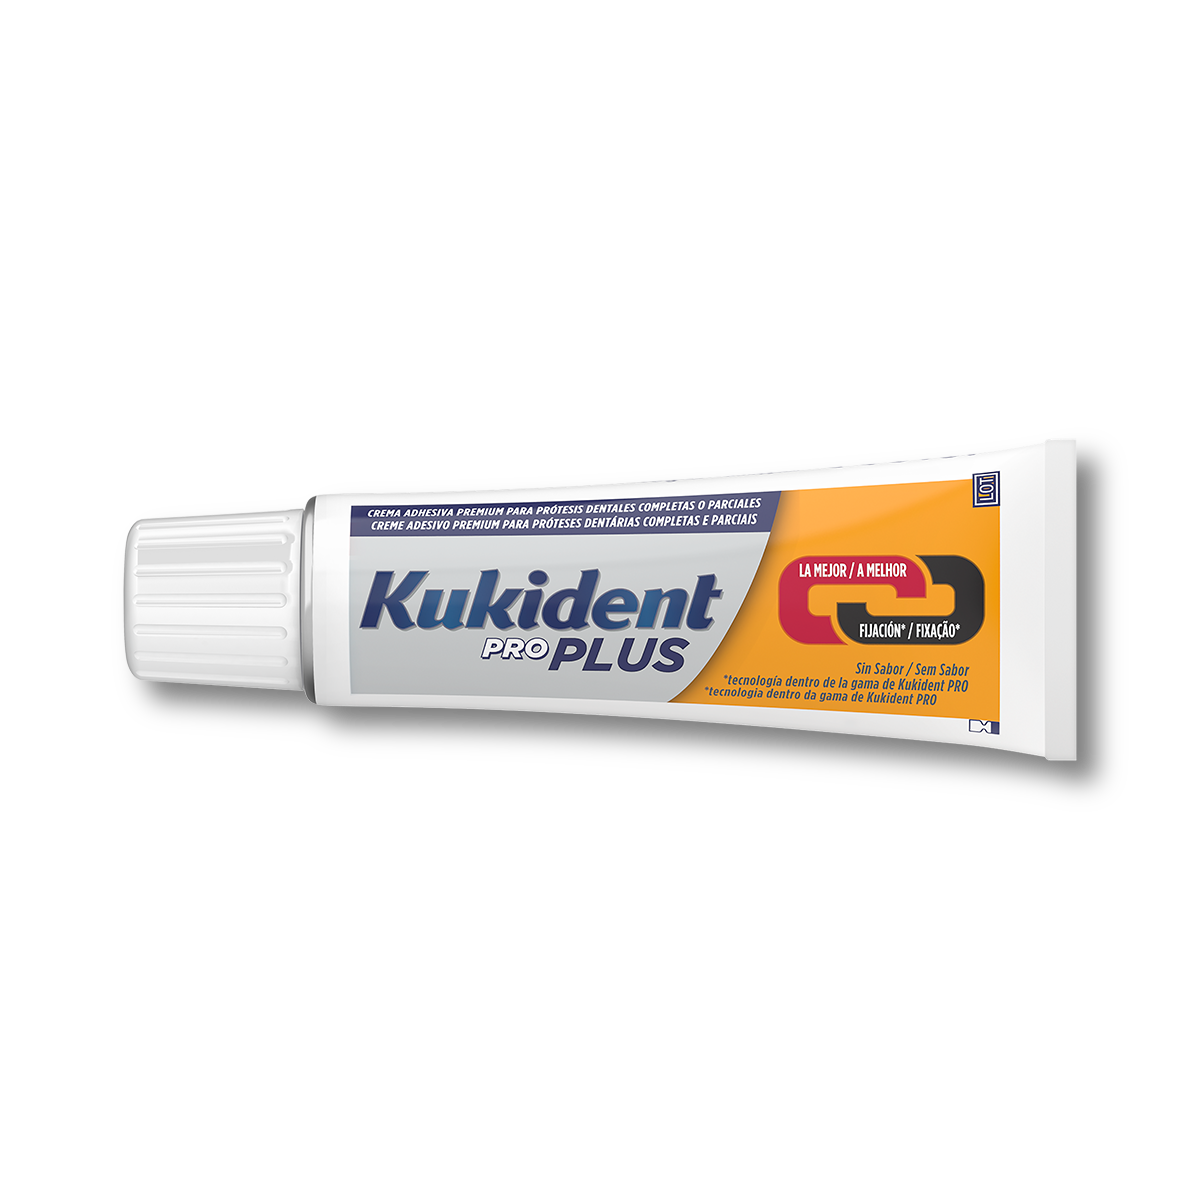 Kukident Pro Plus La Mejor Fijación Crema Prótesis Dentales 60g